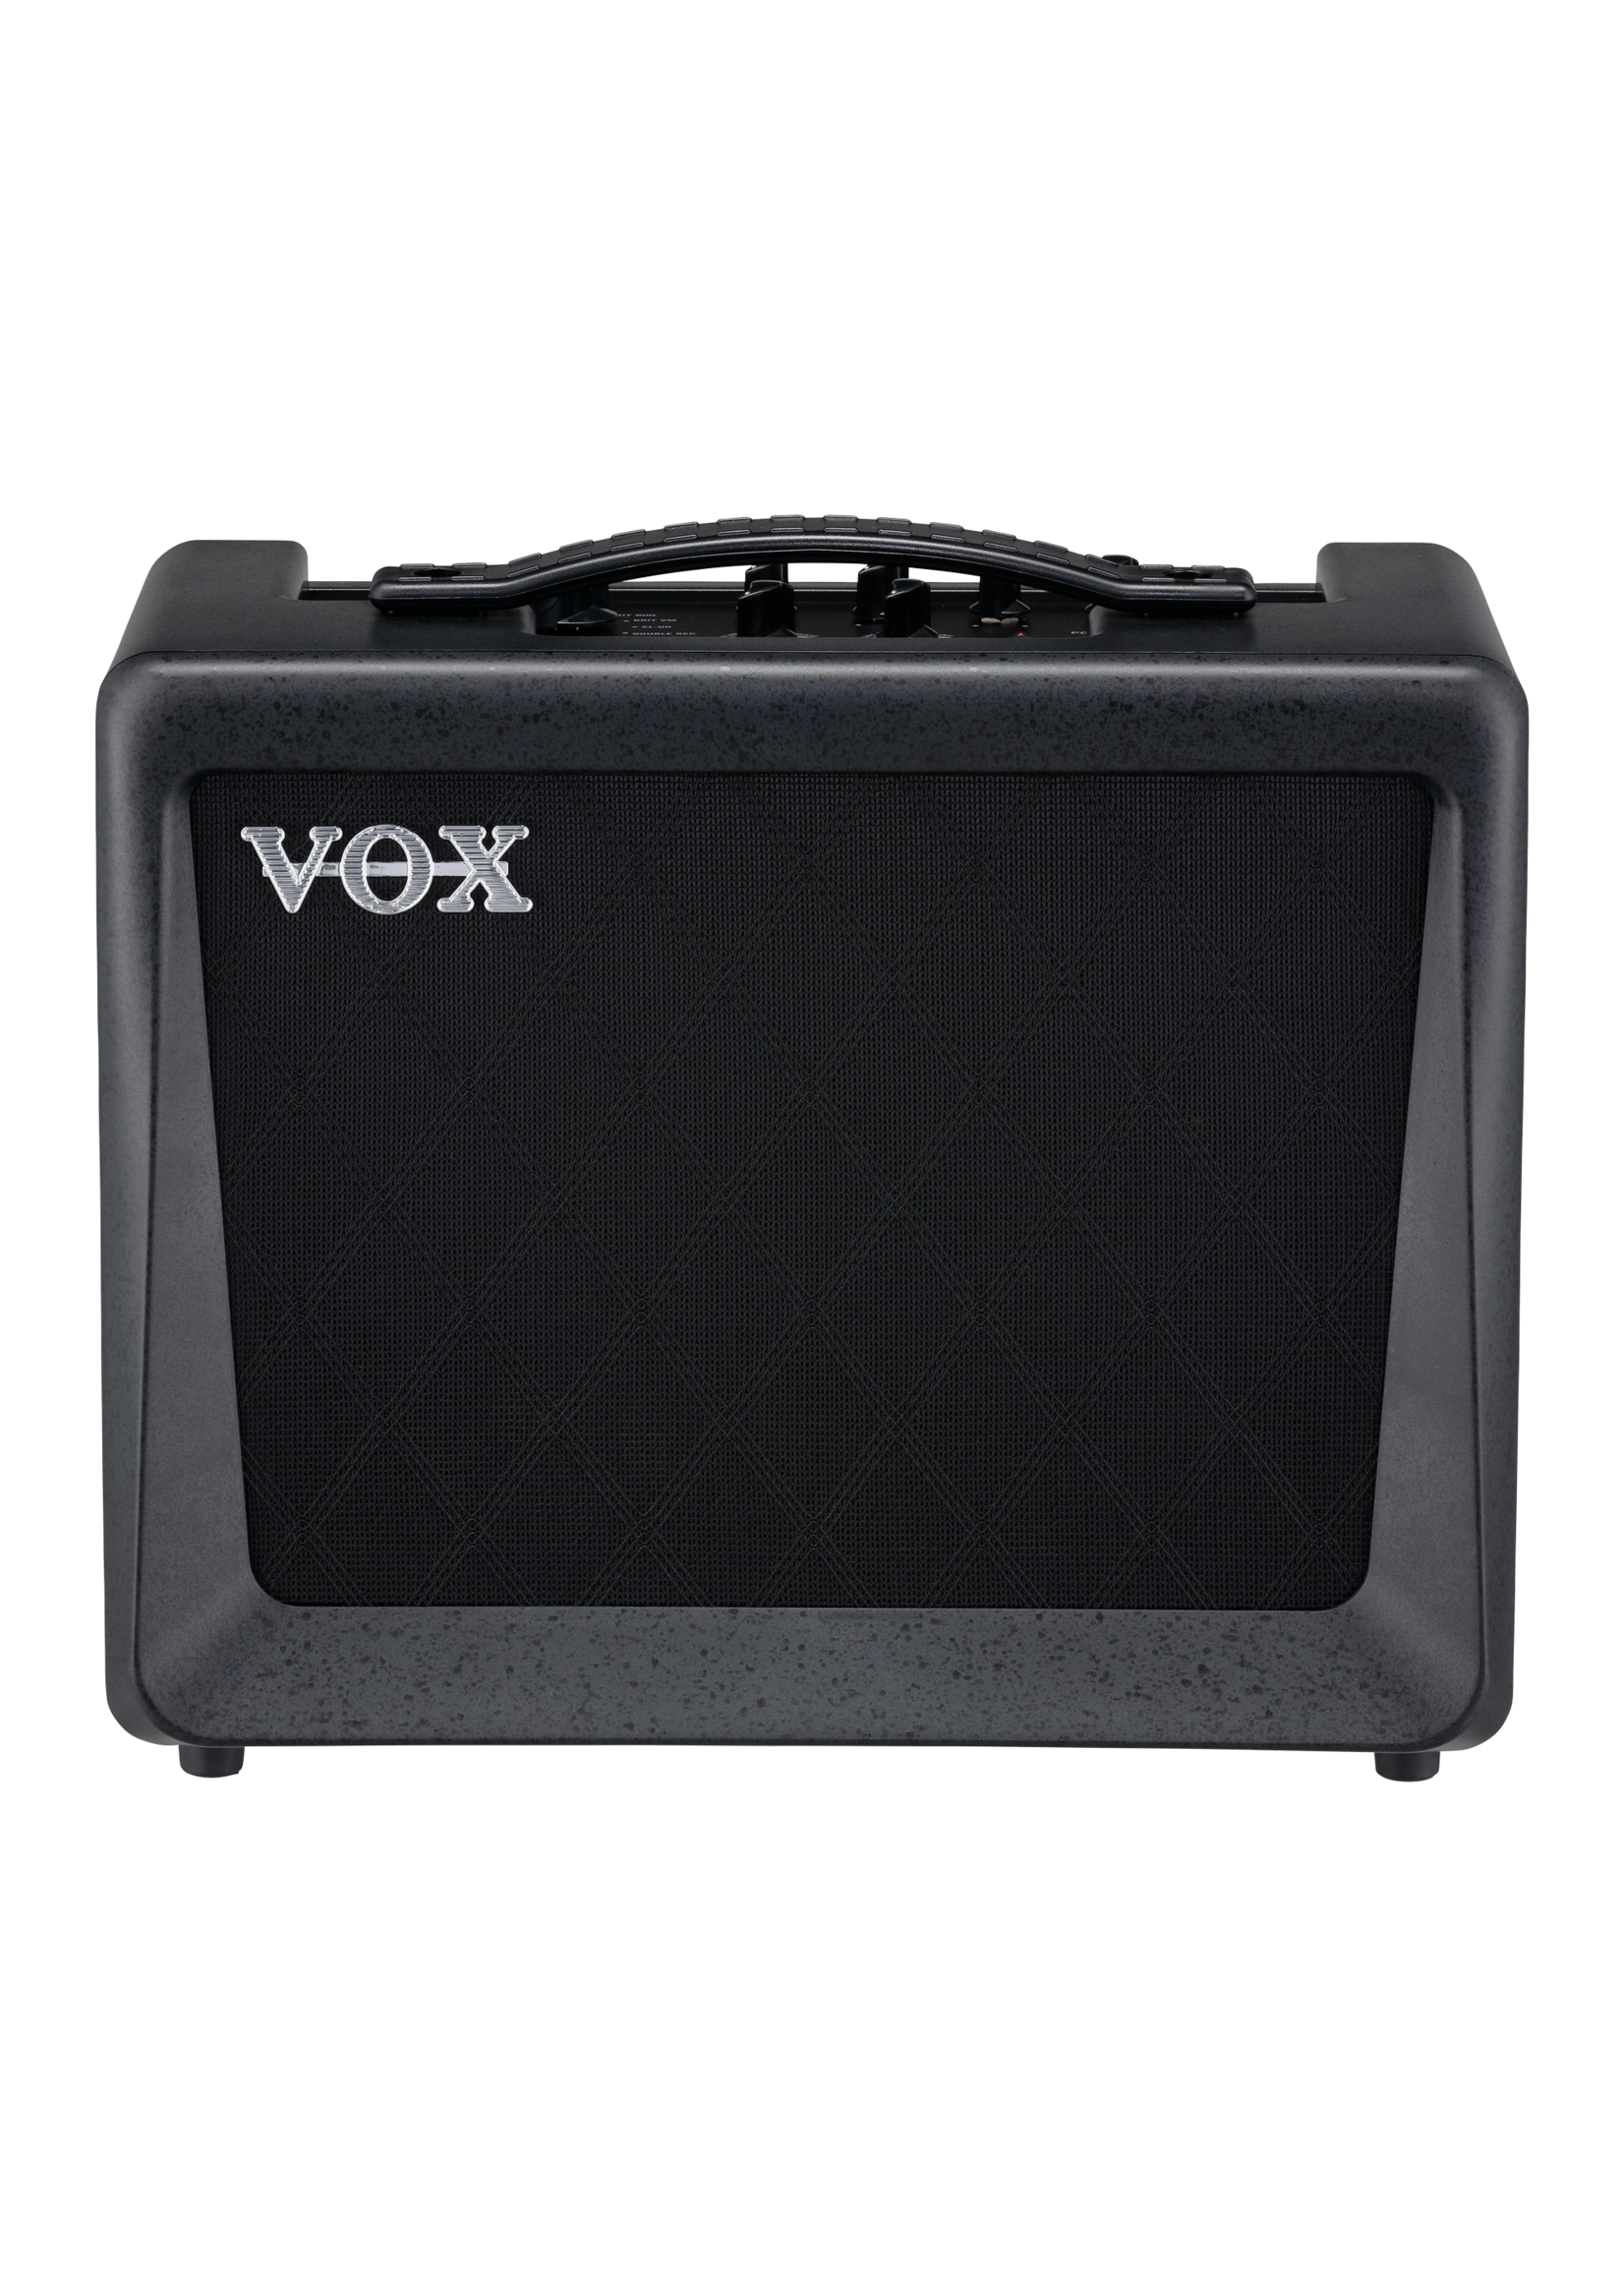 Vox Vox VX15 GT gitaarcombo